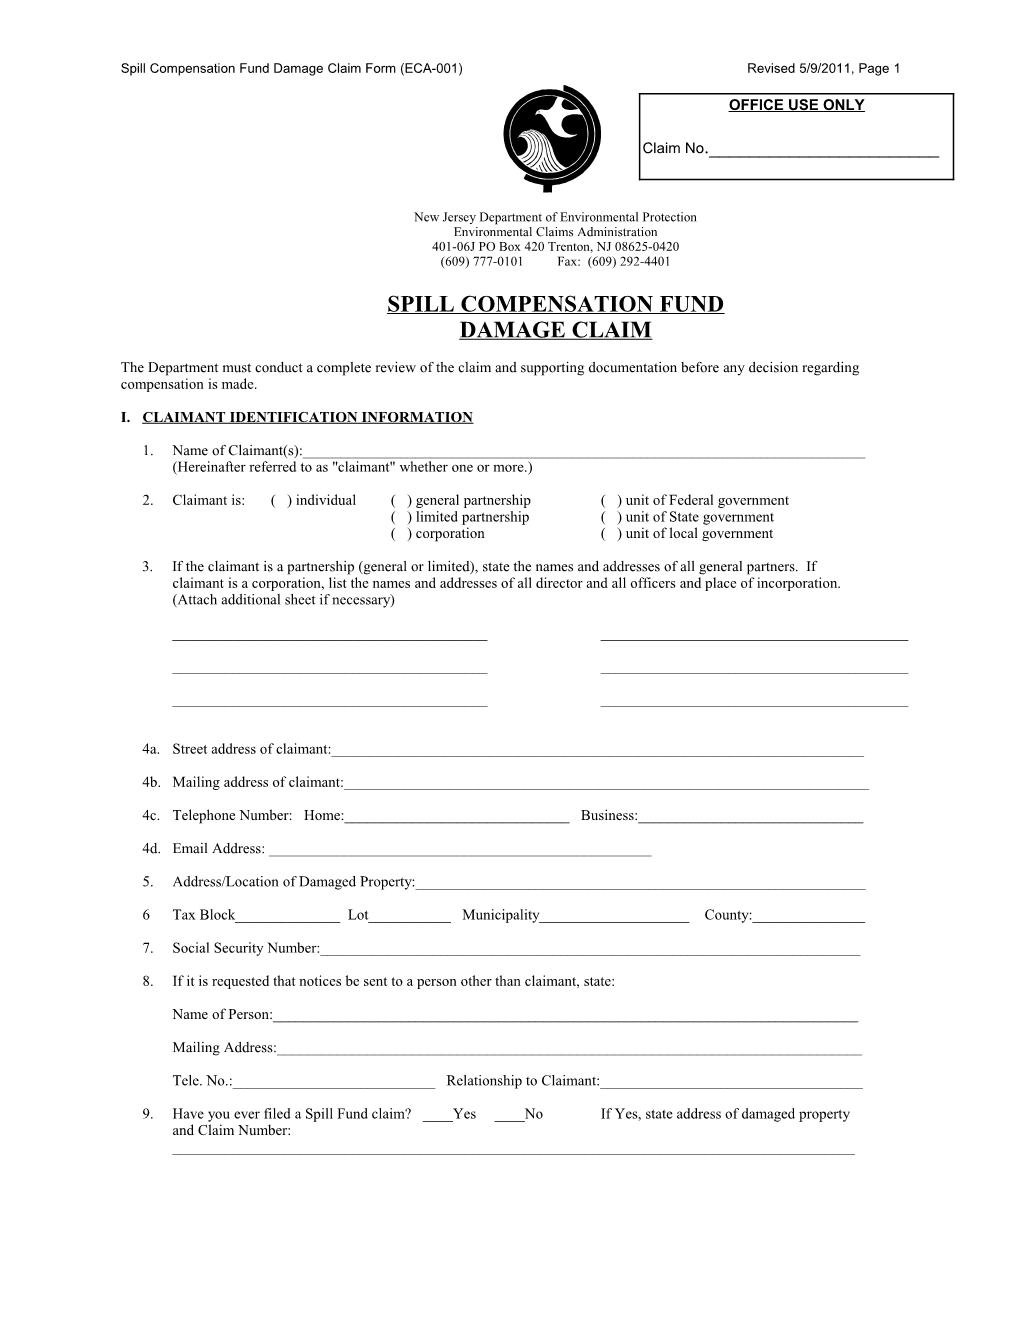 NJDEP Form ECA-001 (Revised 2011/05)